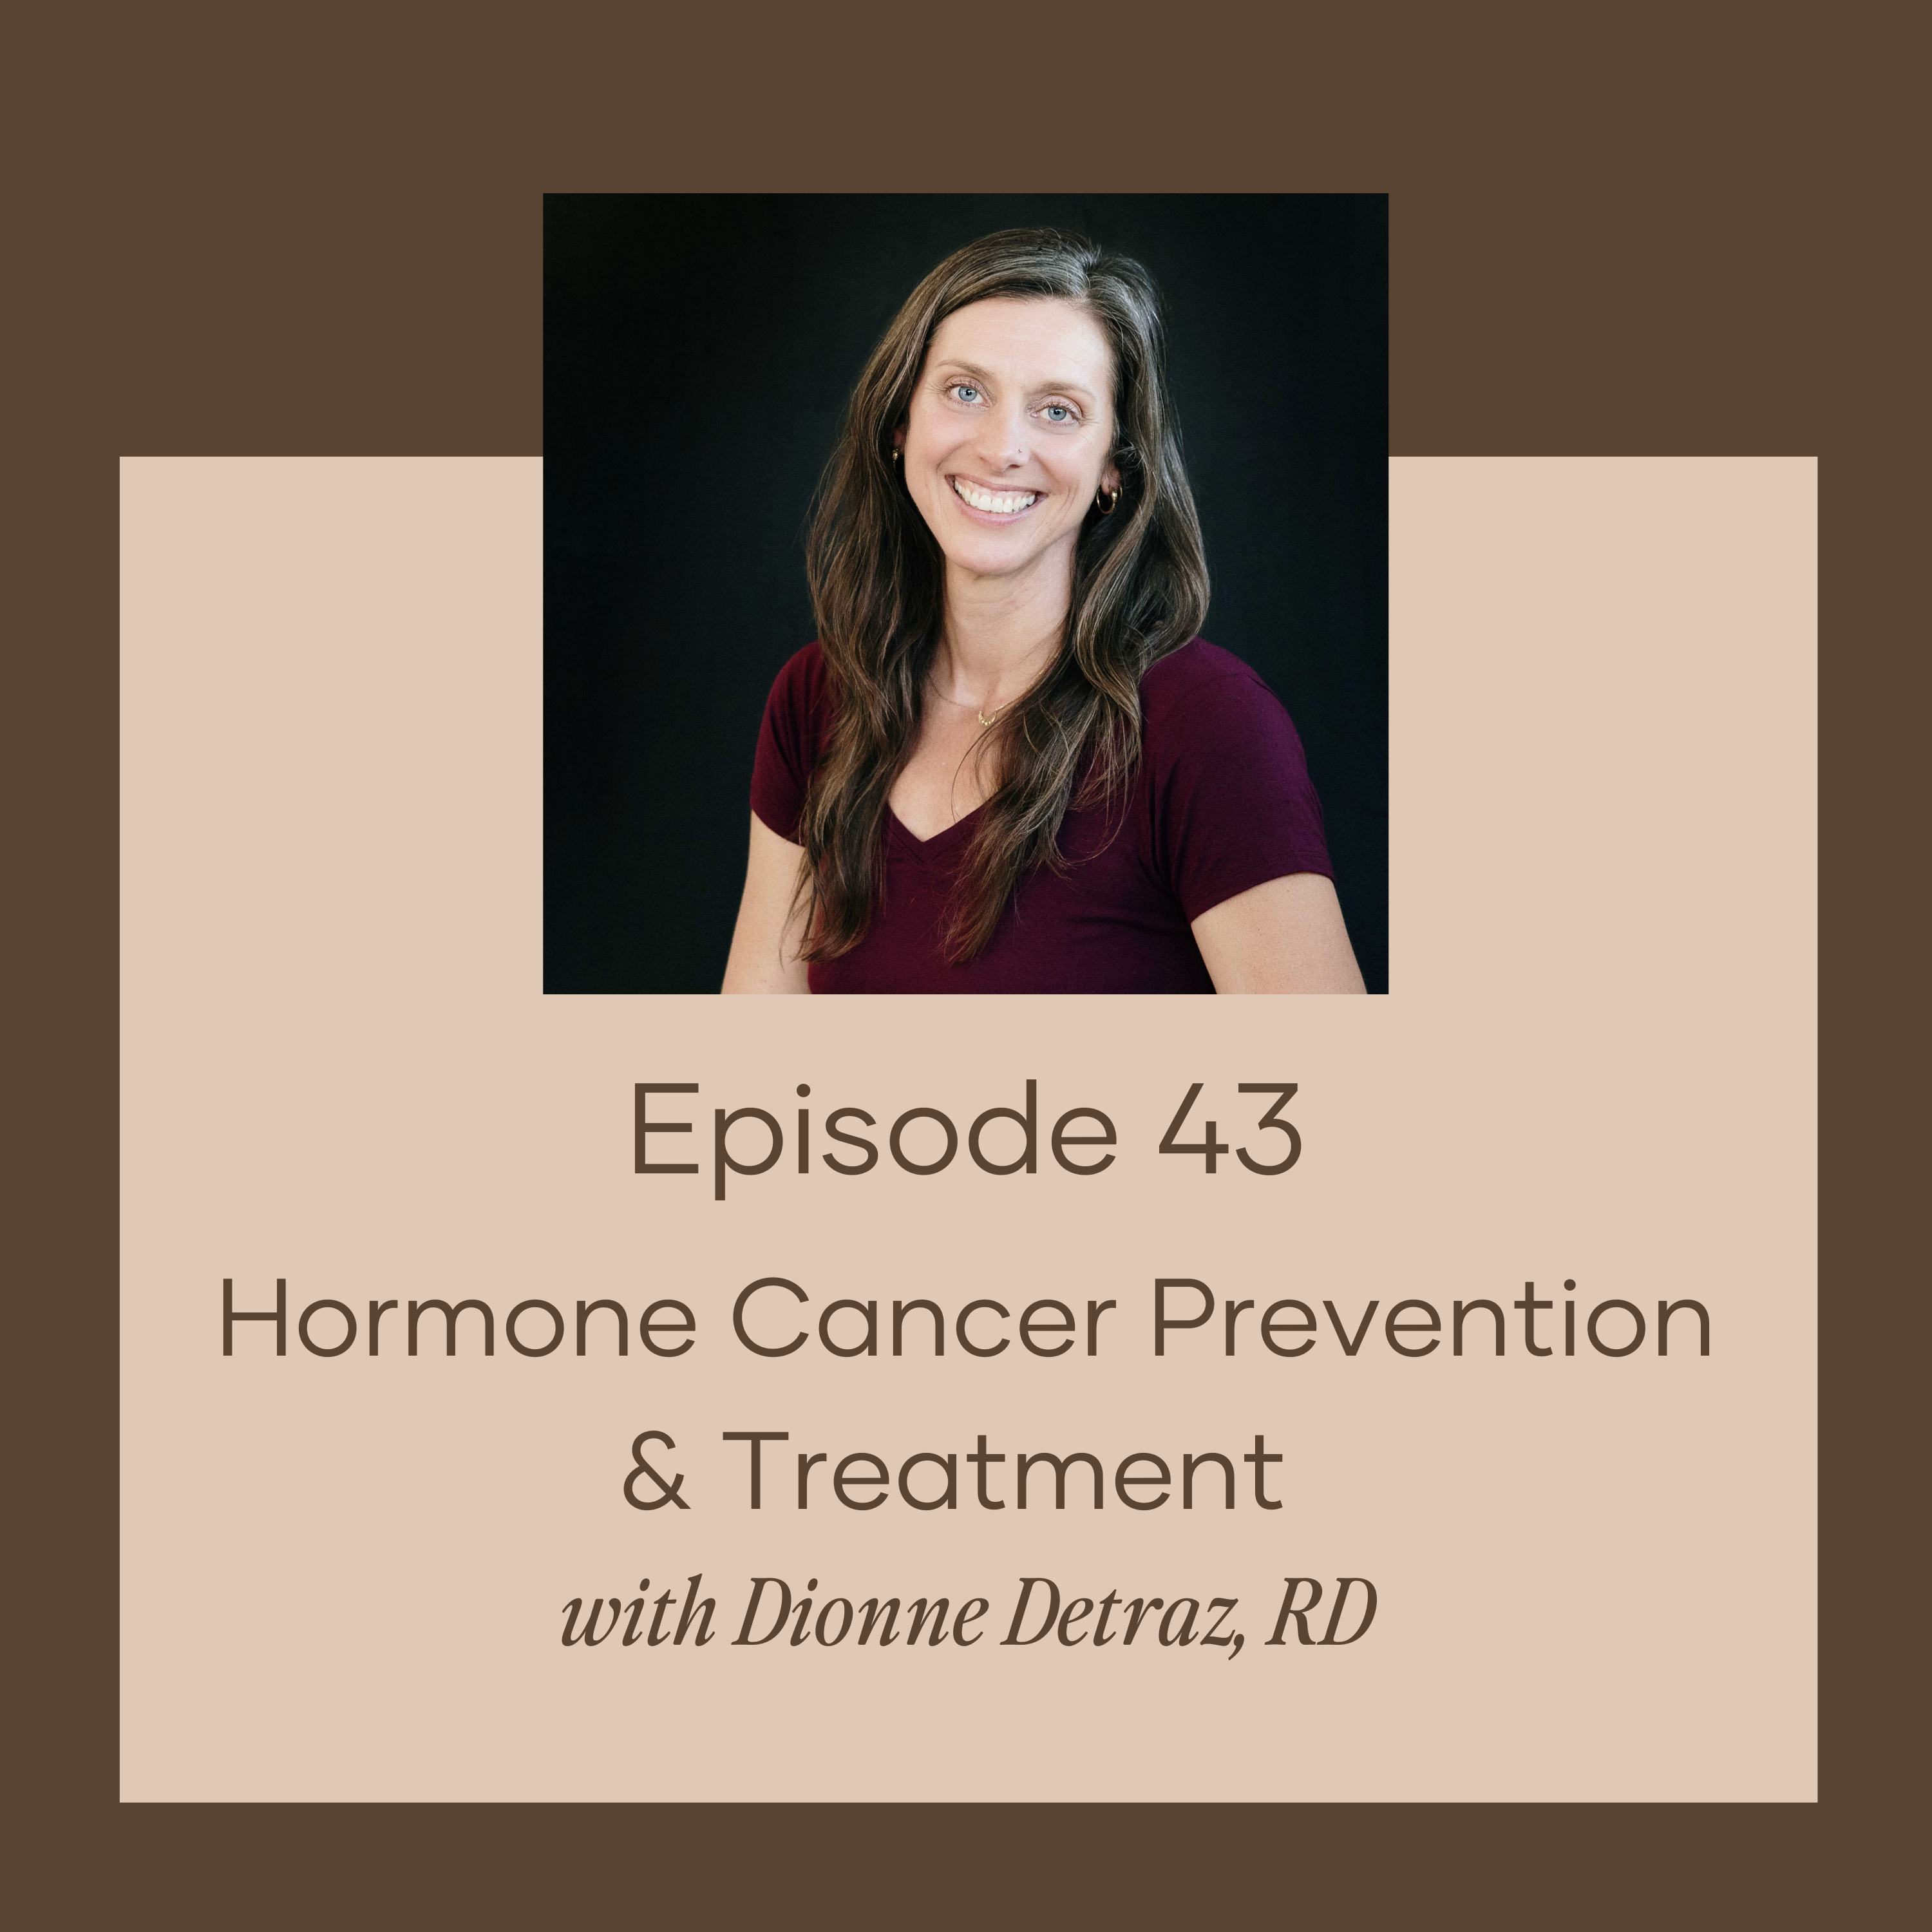 Hormone Cancer Prevention & Treatment